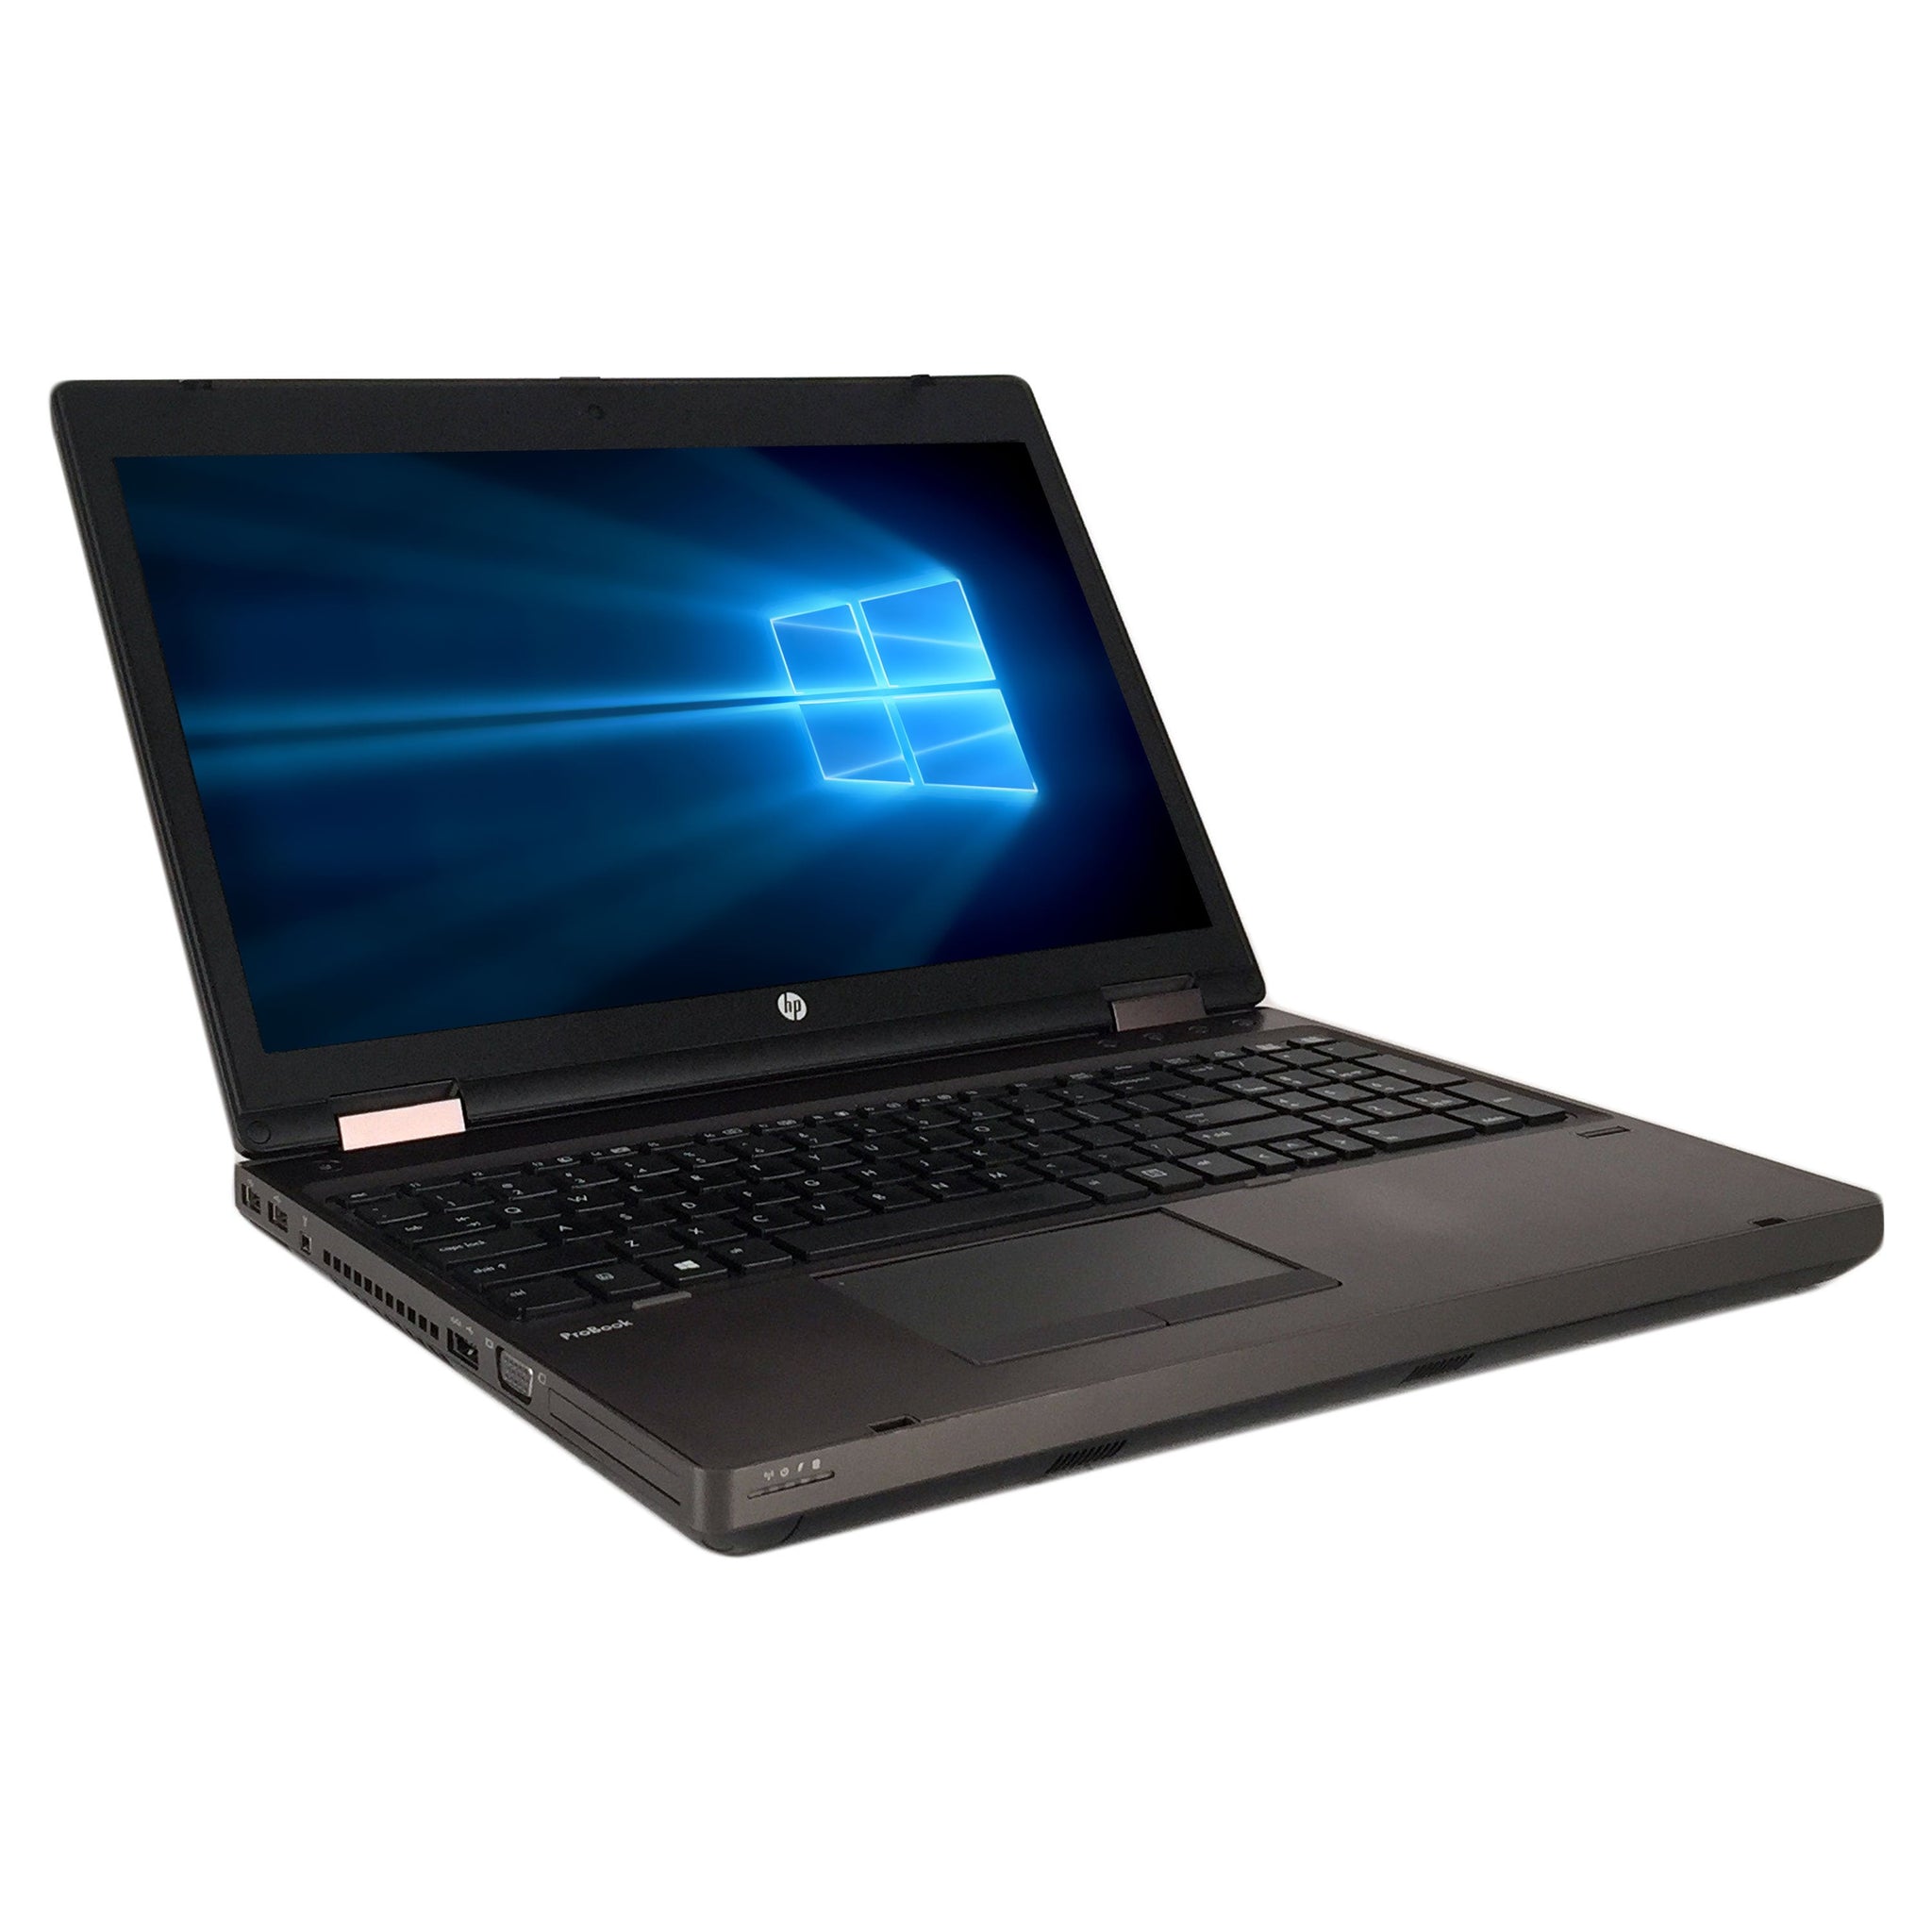 HP ProBook 6560b Refurbished Notebook PC | Refurbish Canada | Free